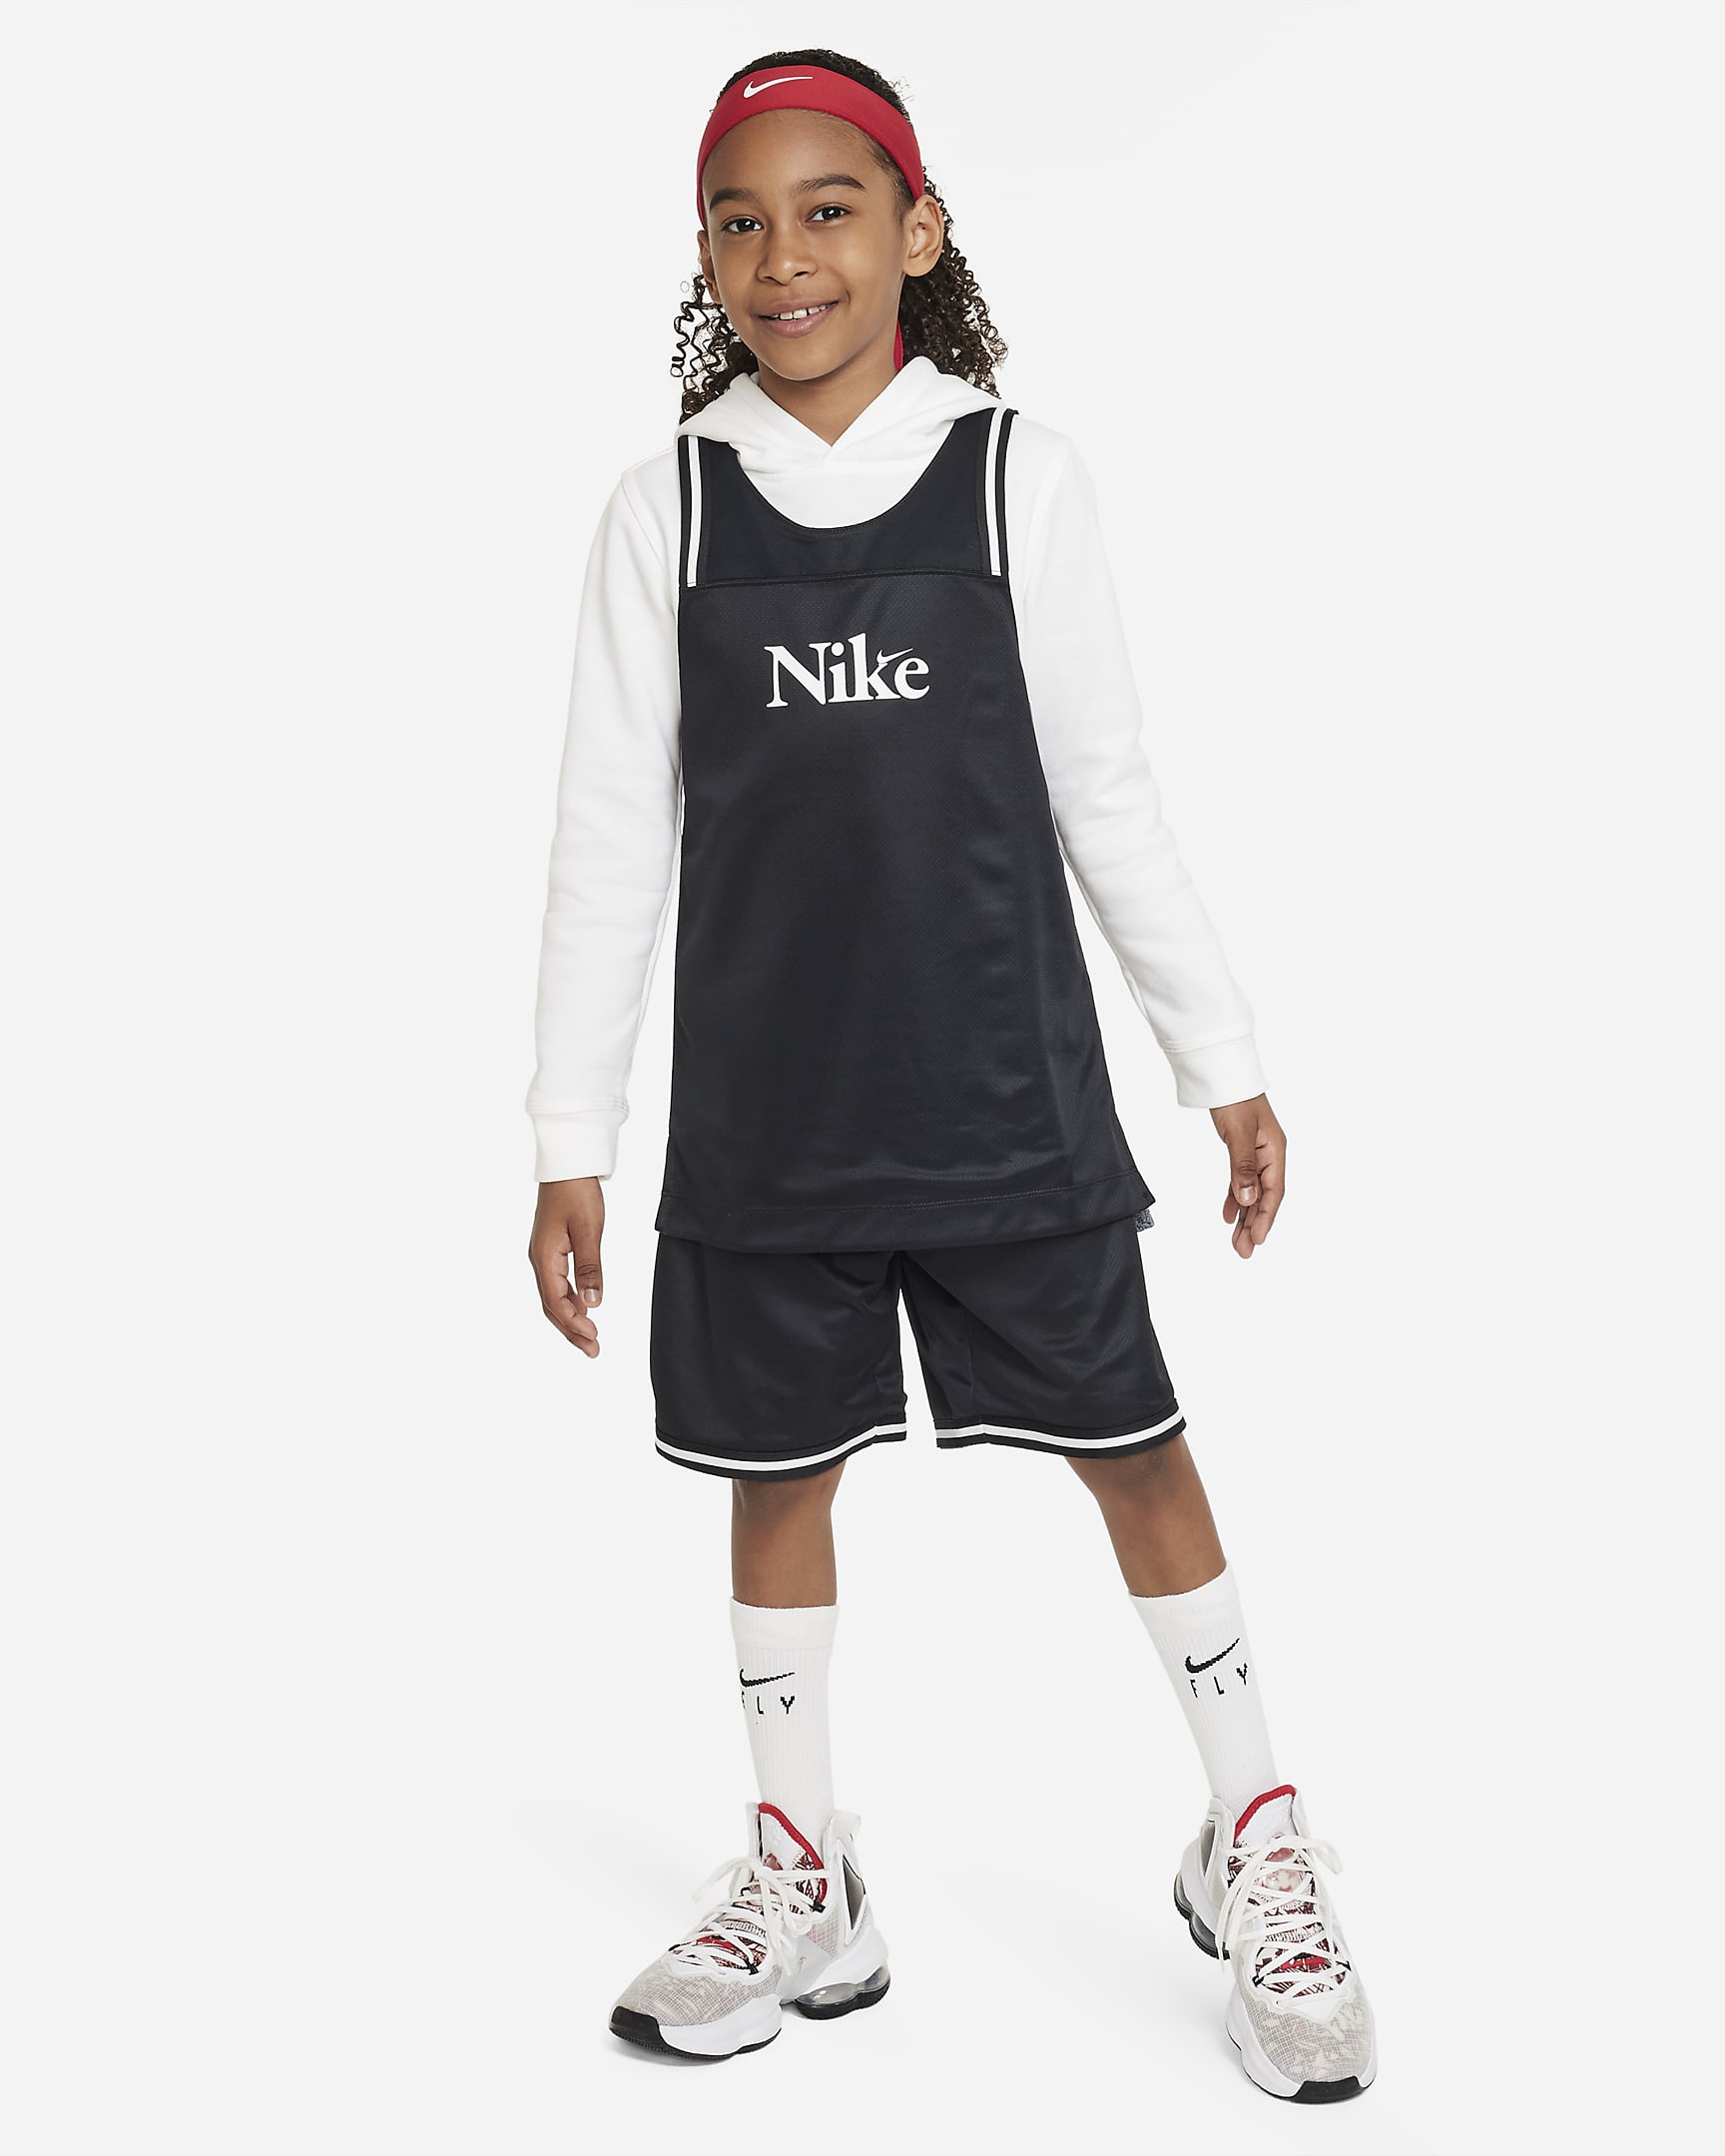 Nike Culture of Basketball DNA Big Kids' Reversible Basketball Shorts ...